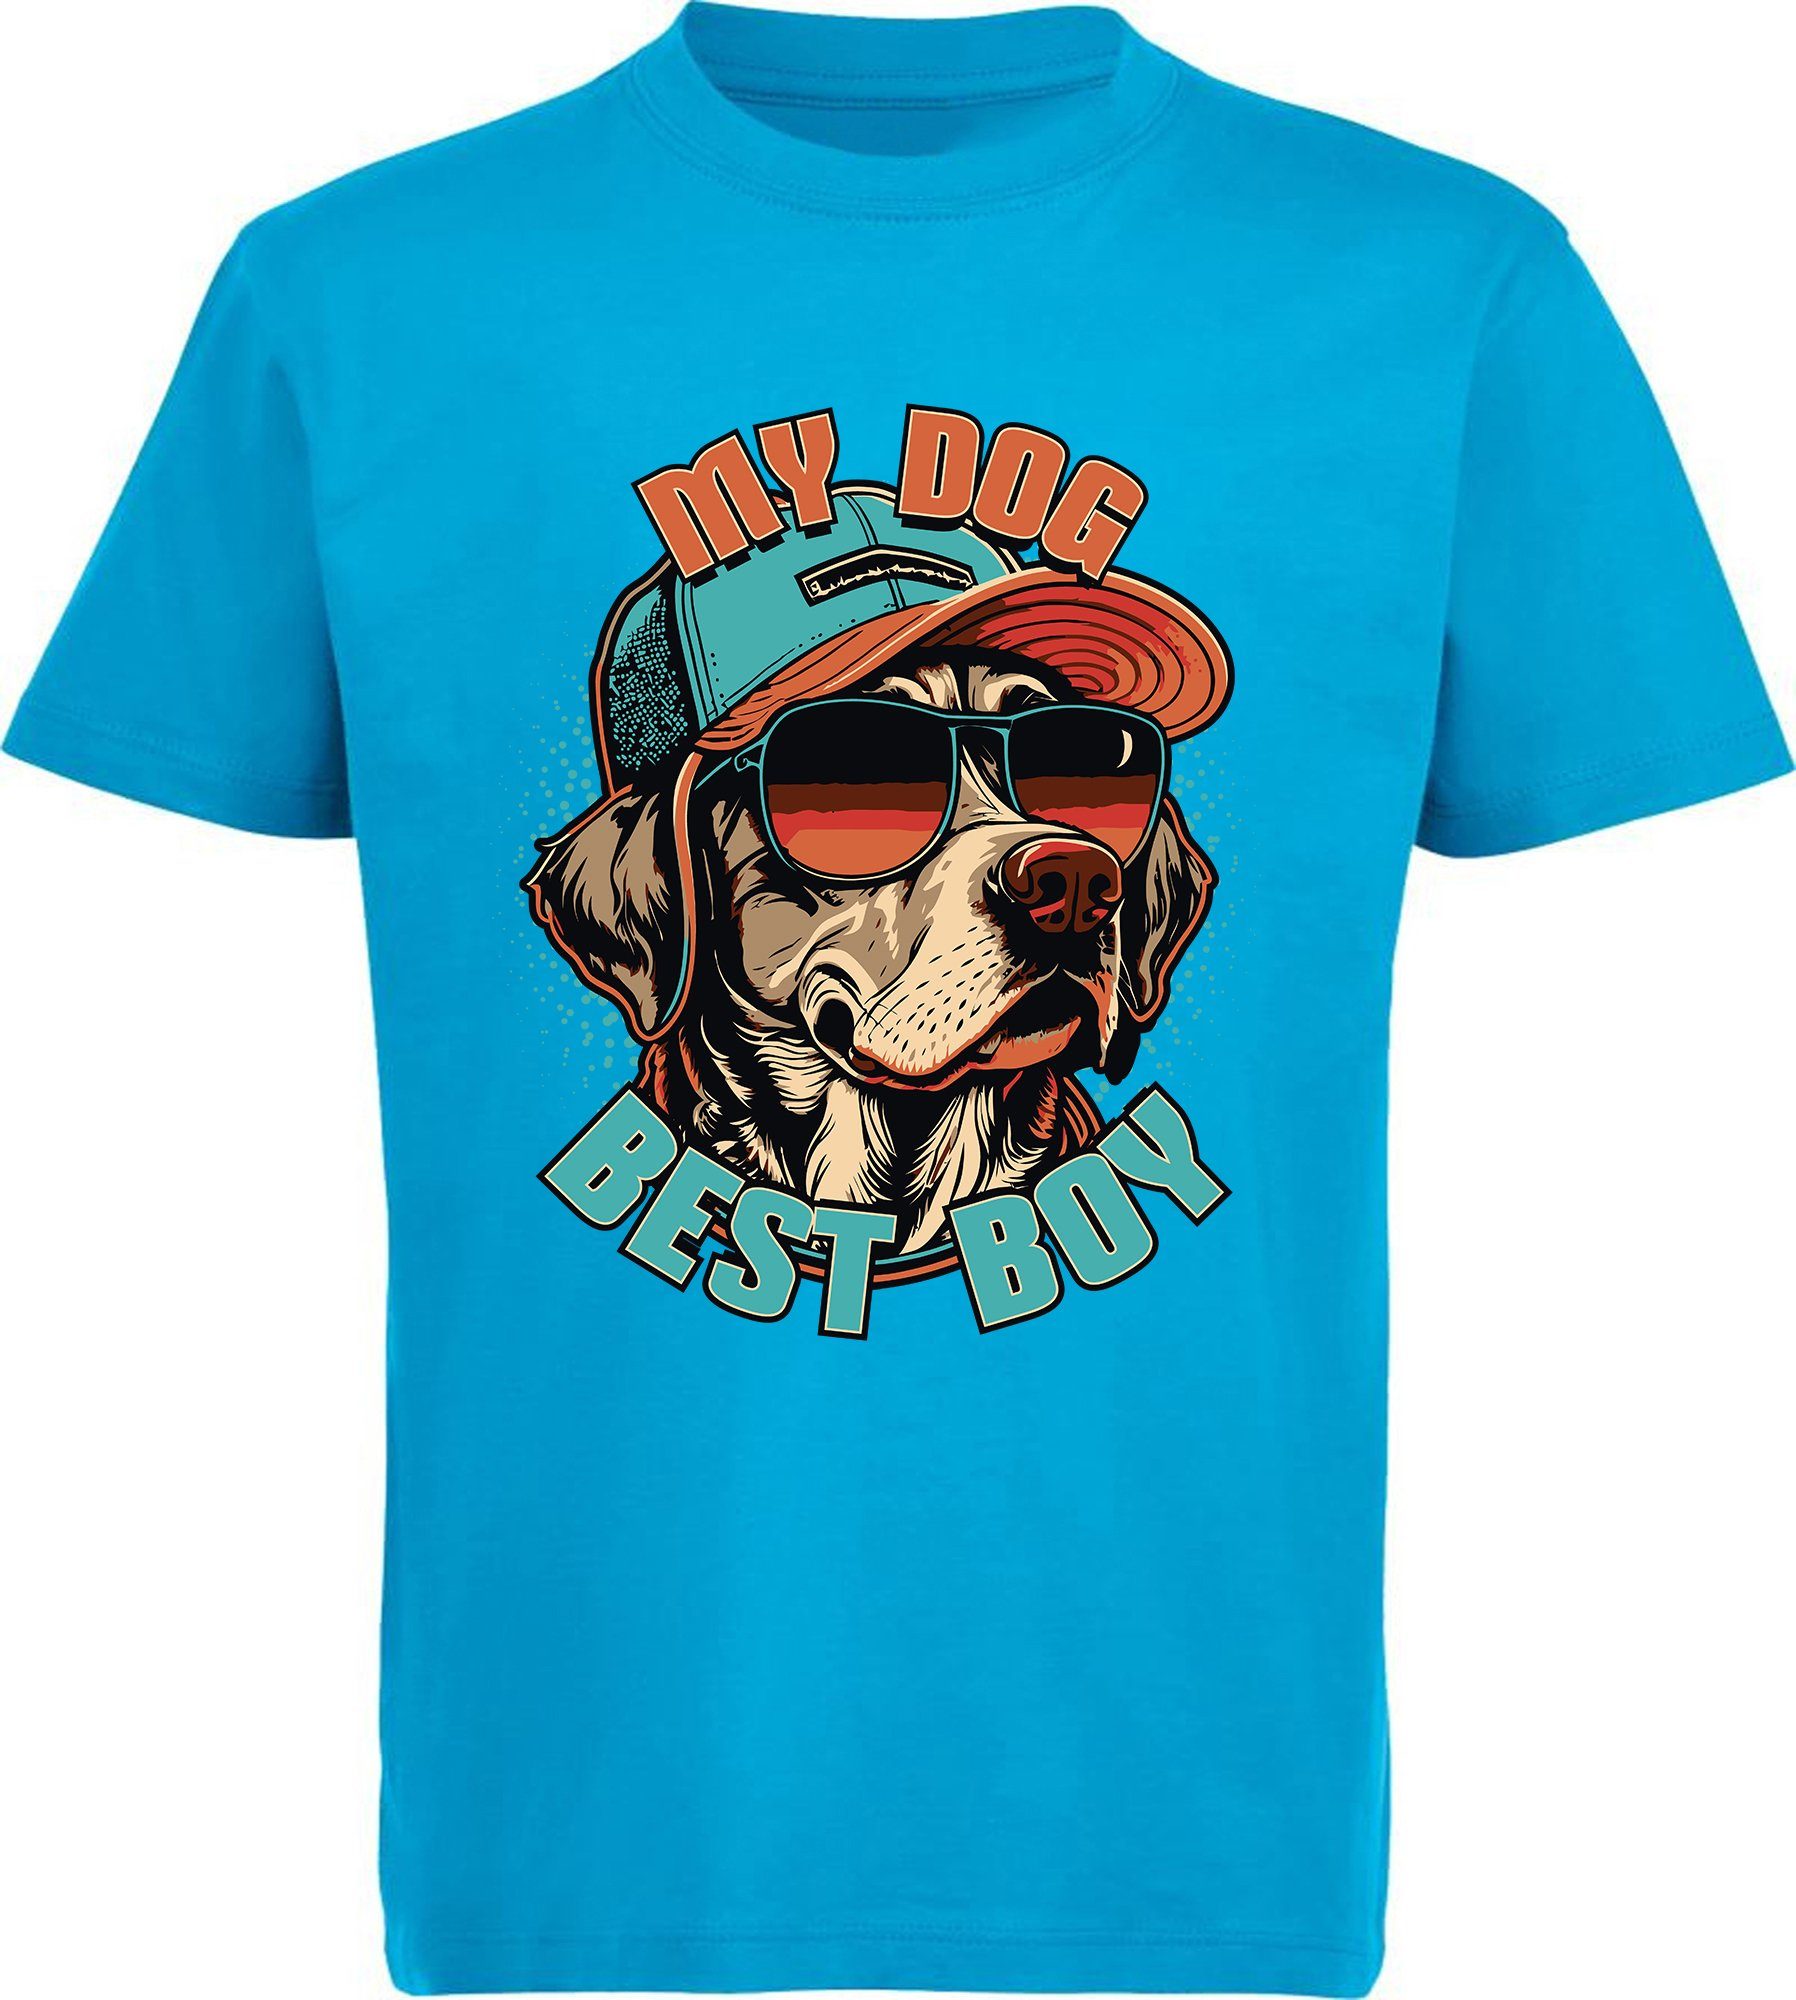 Cap mit mit Print-Shirt Cooler MyDesign24 T-Shirt Hunde Kinder Hund blau i225 Aufdruck, aqua Baumwollshirt bedrucktes -